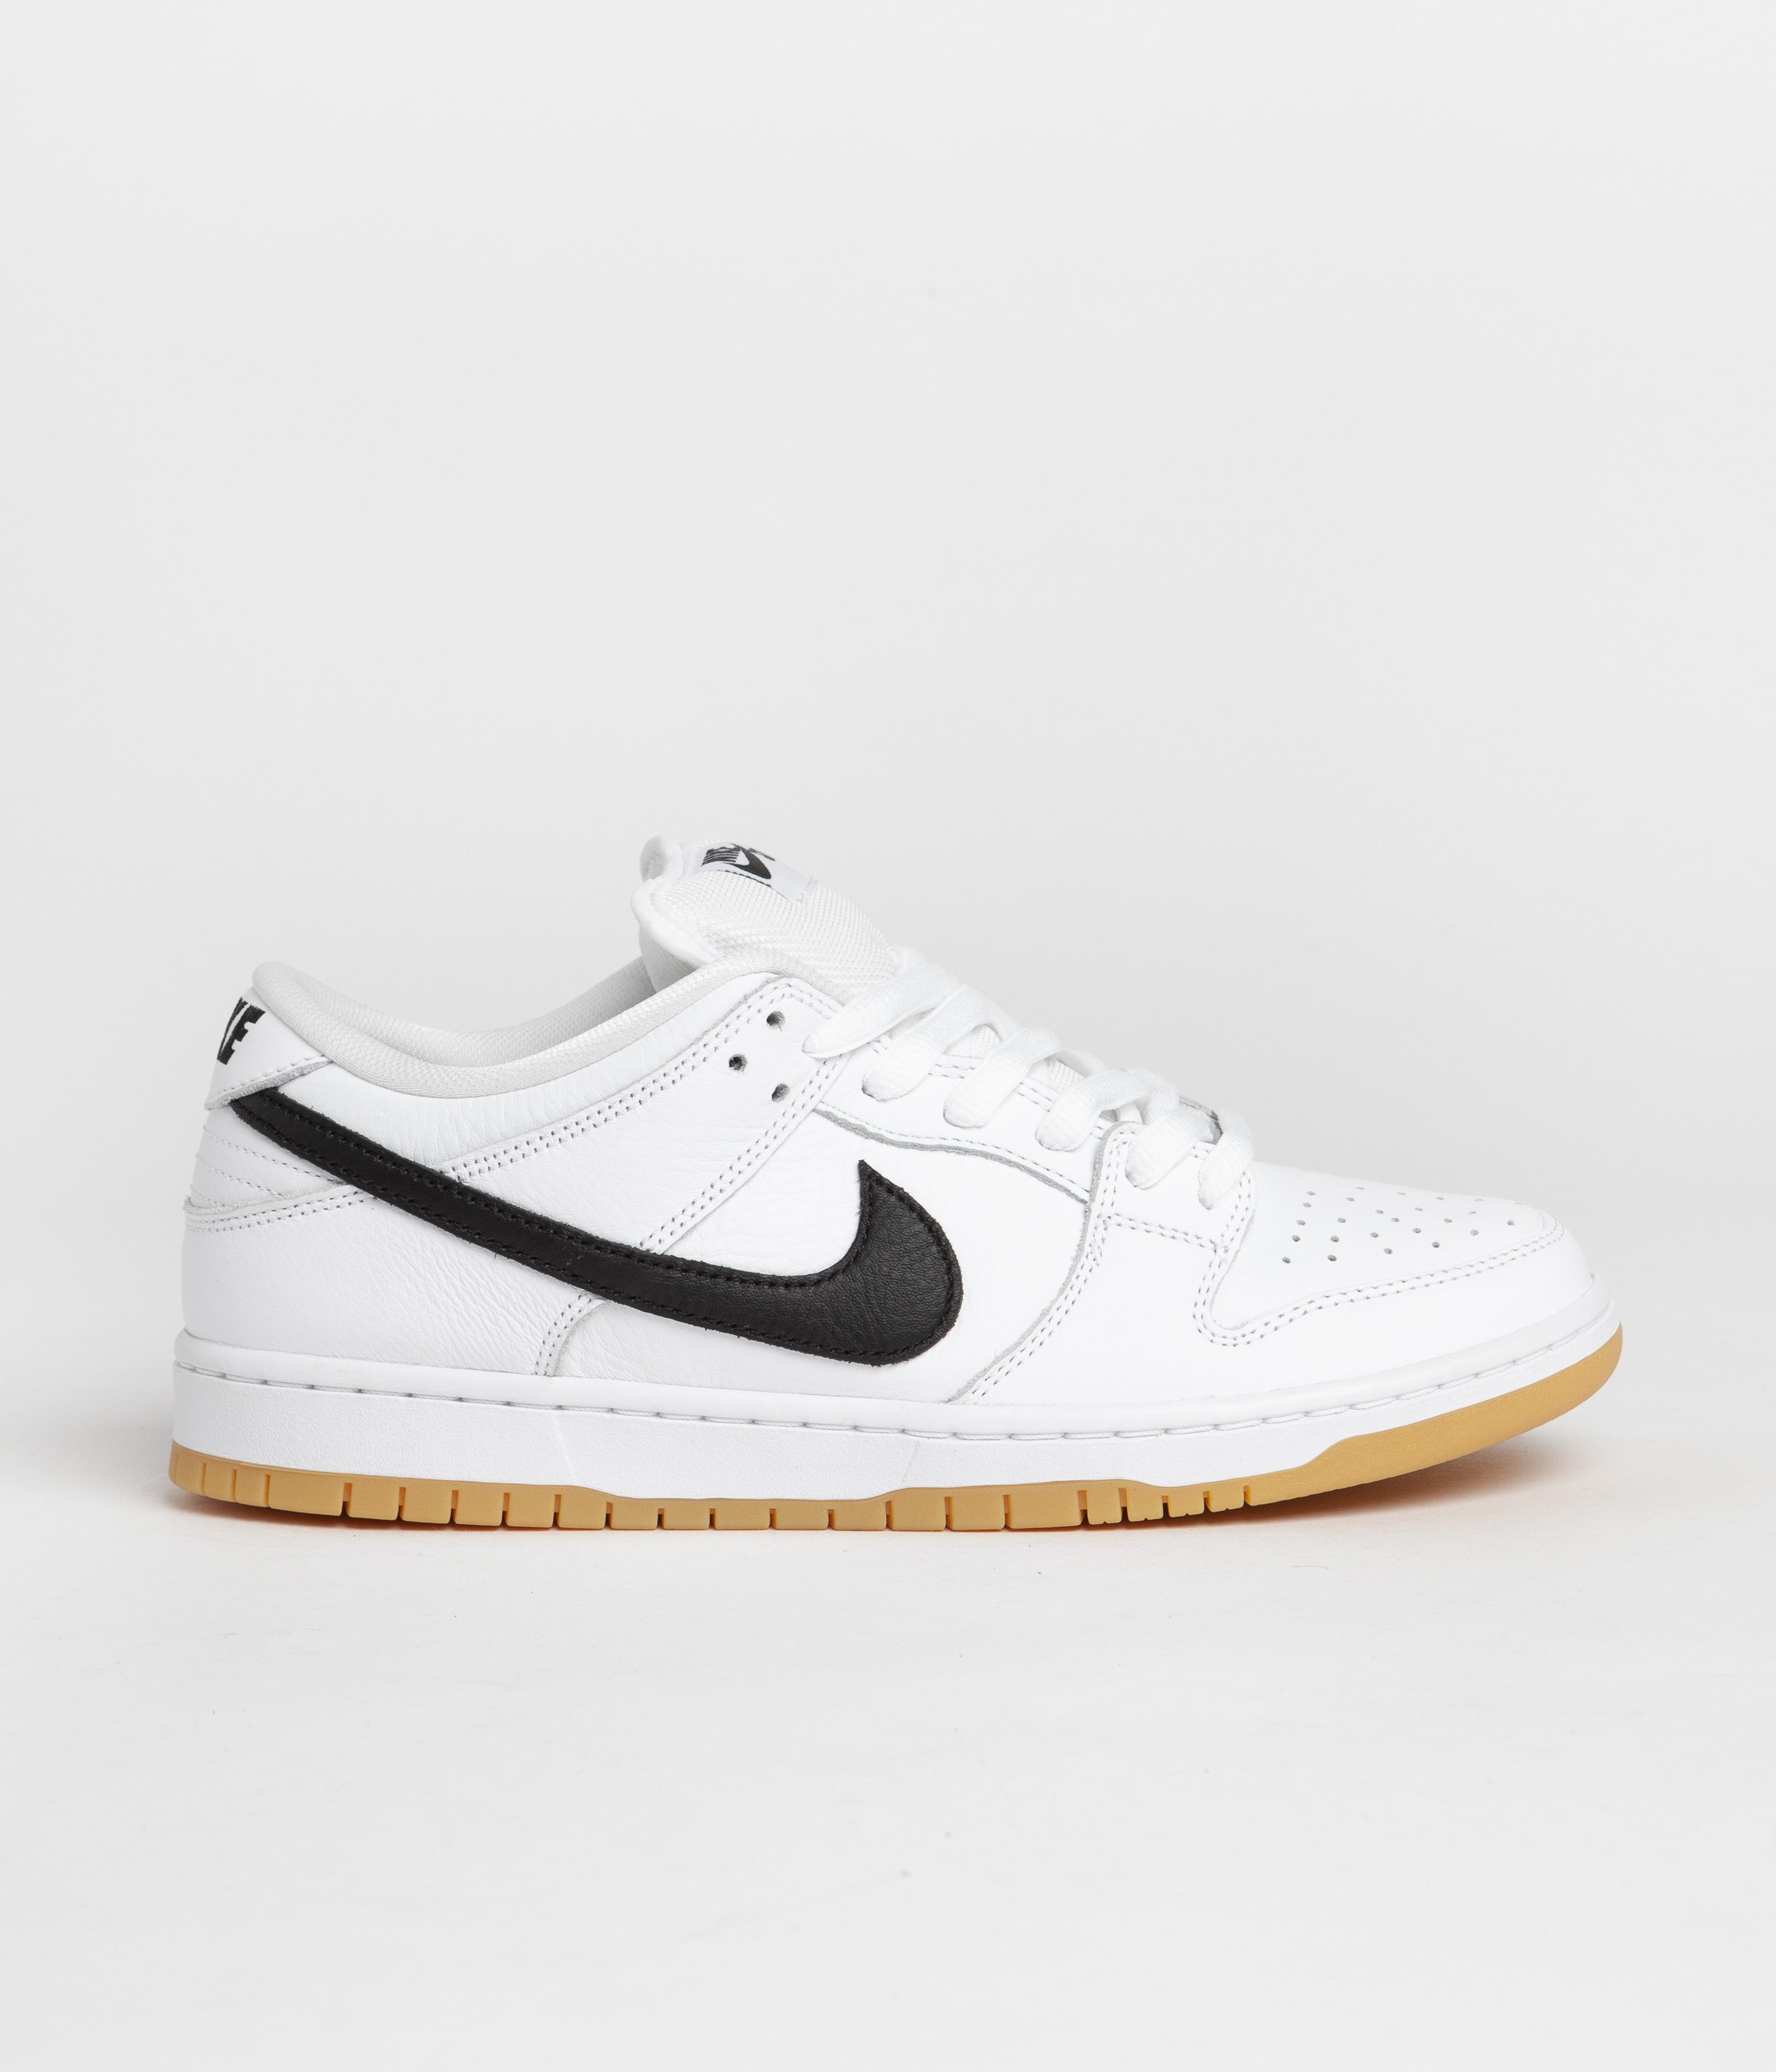 Nike Dunk Low Pro Shoes - White / Black - White - Gum Light Brown | Releases.Flatspot